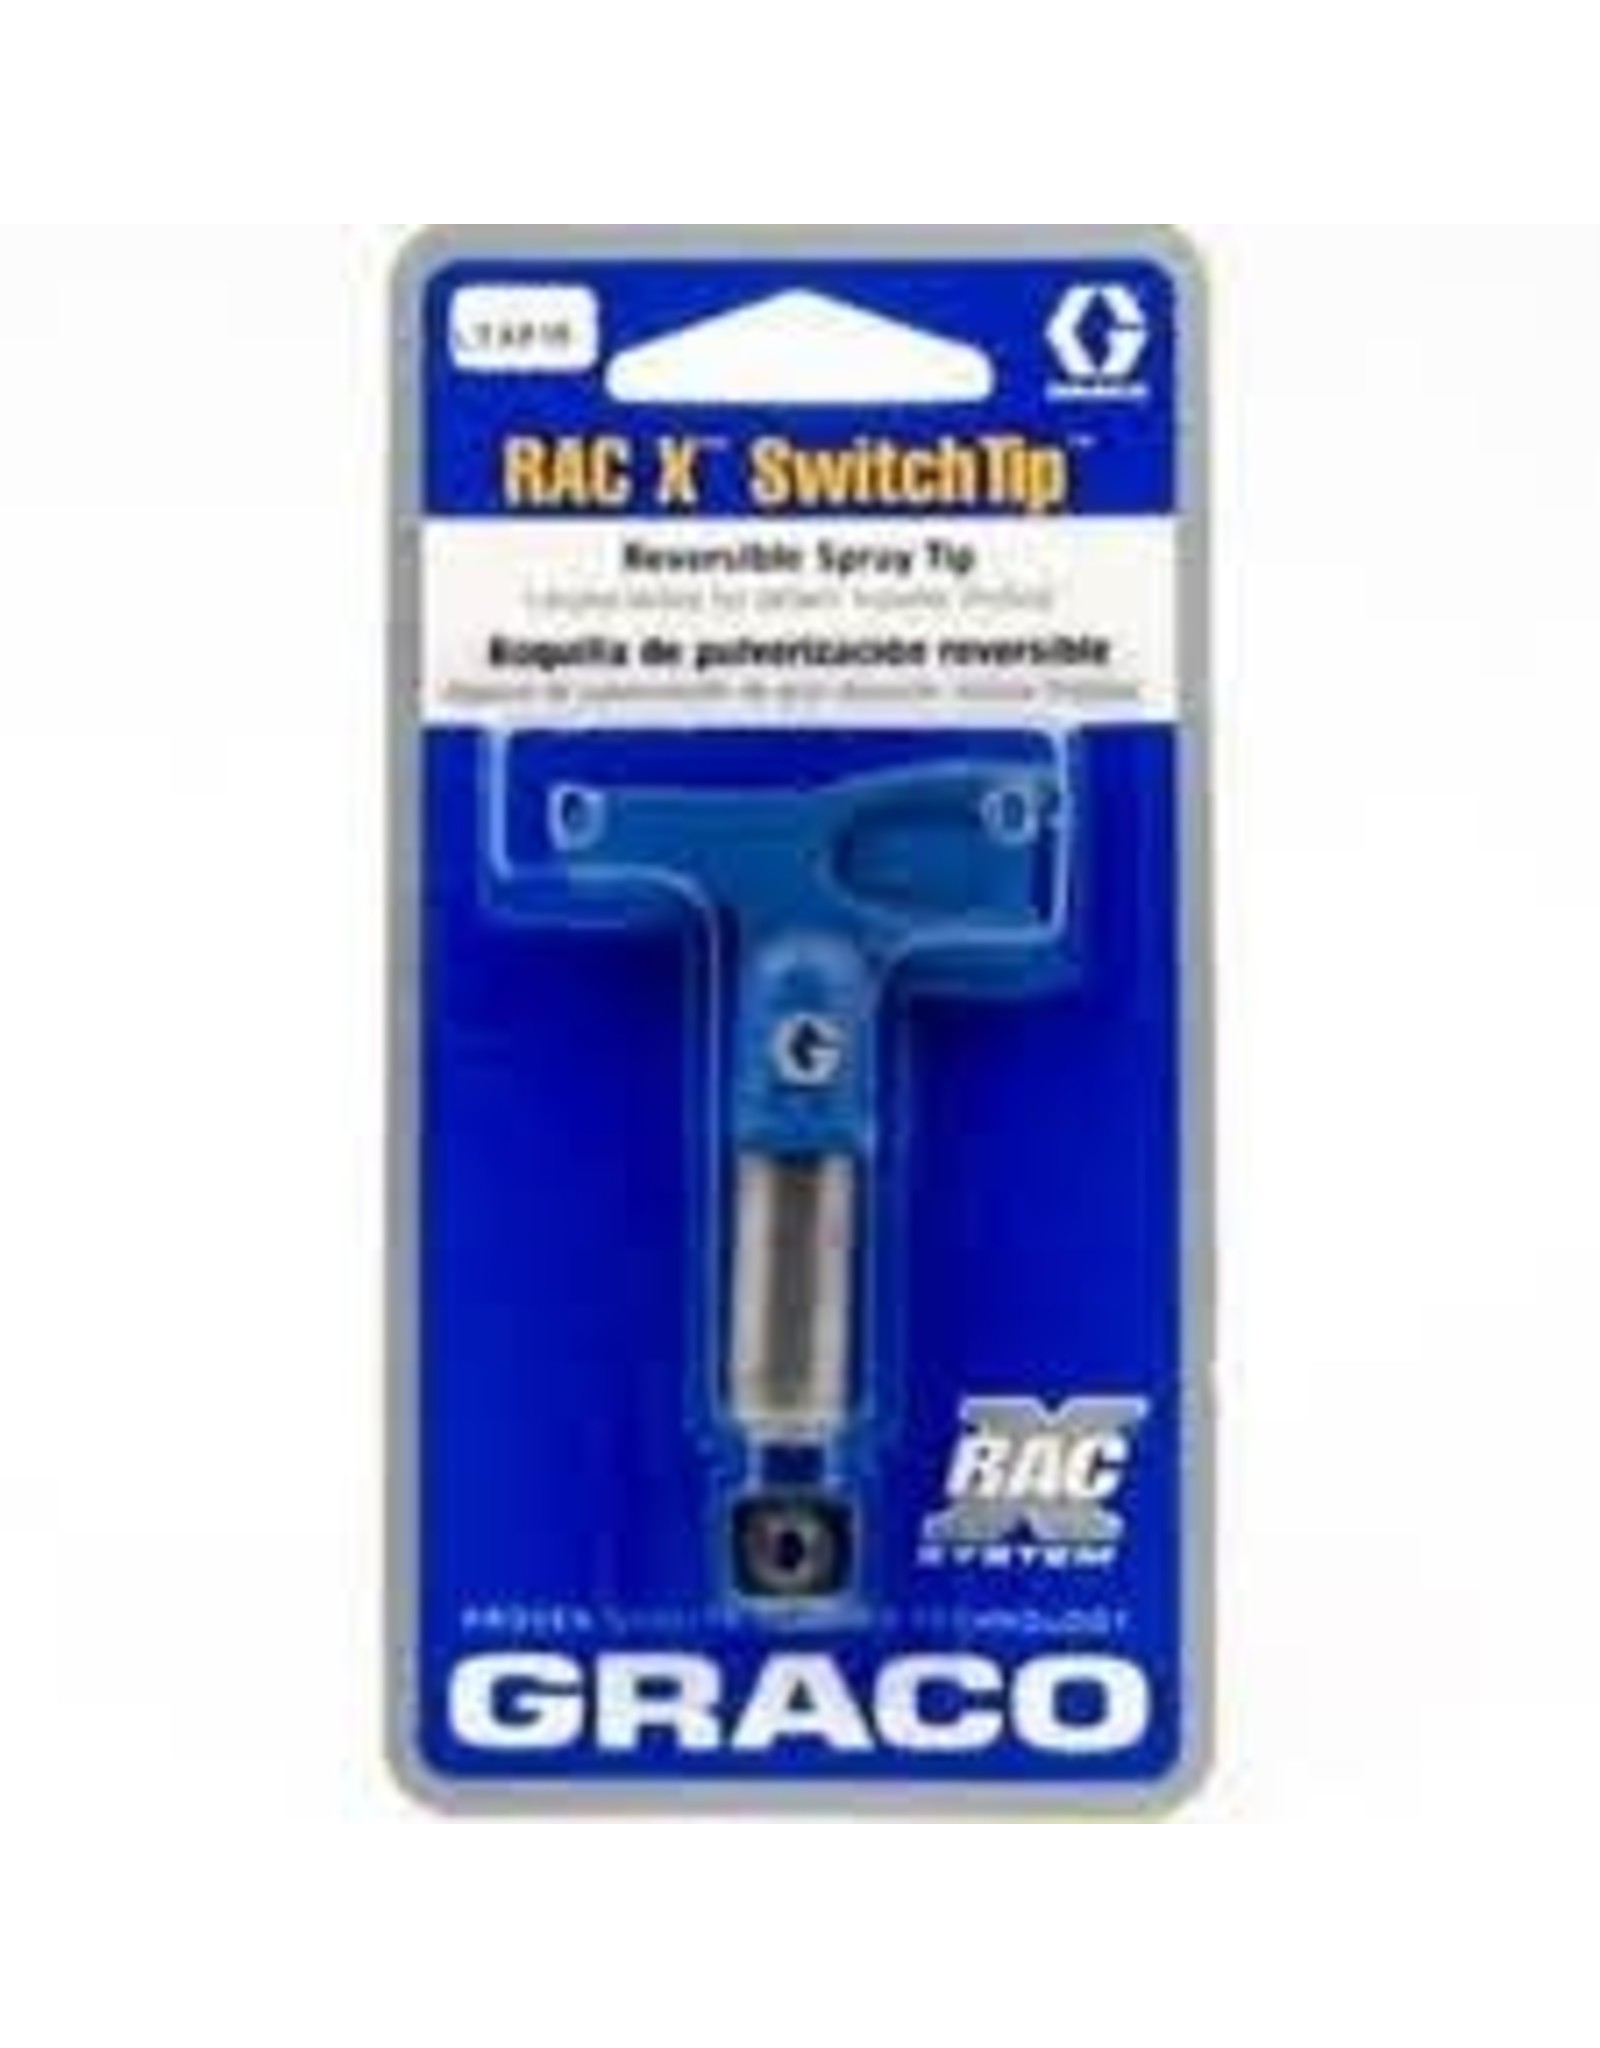 Graco LTX519 RAC X Switch Tip